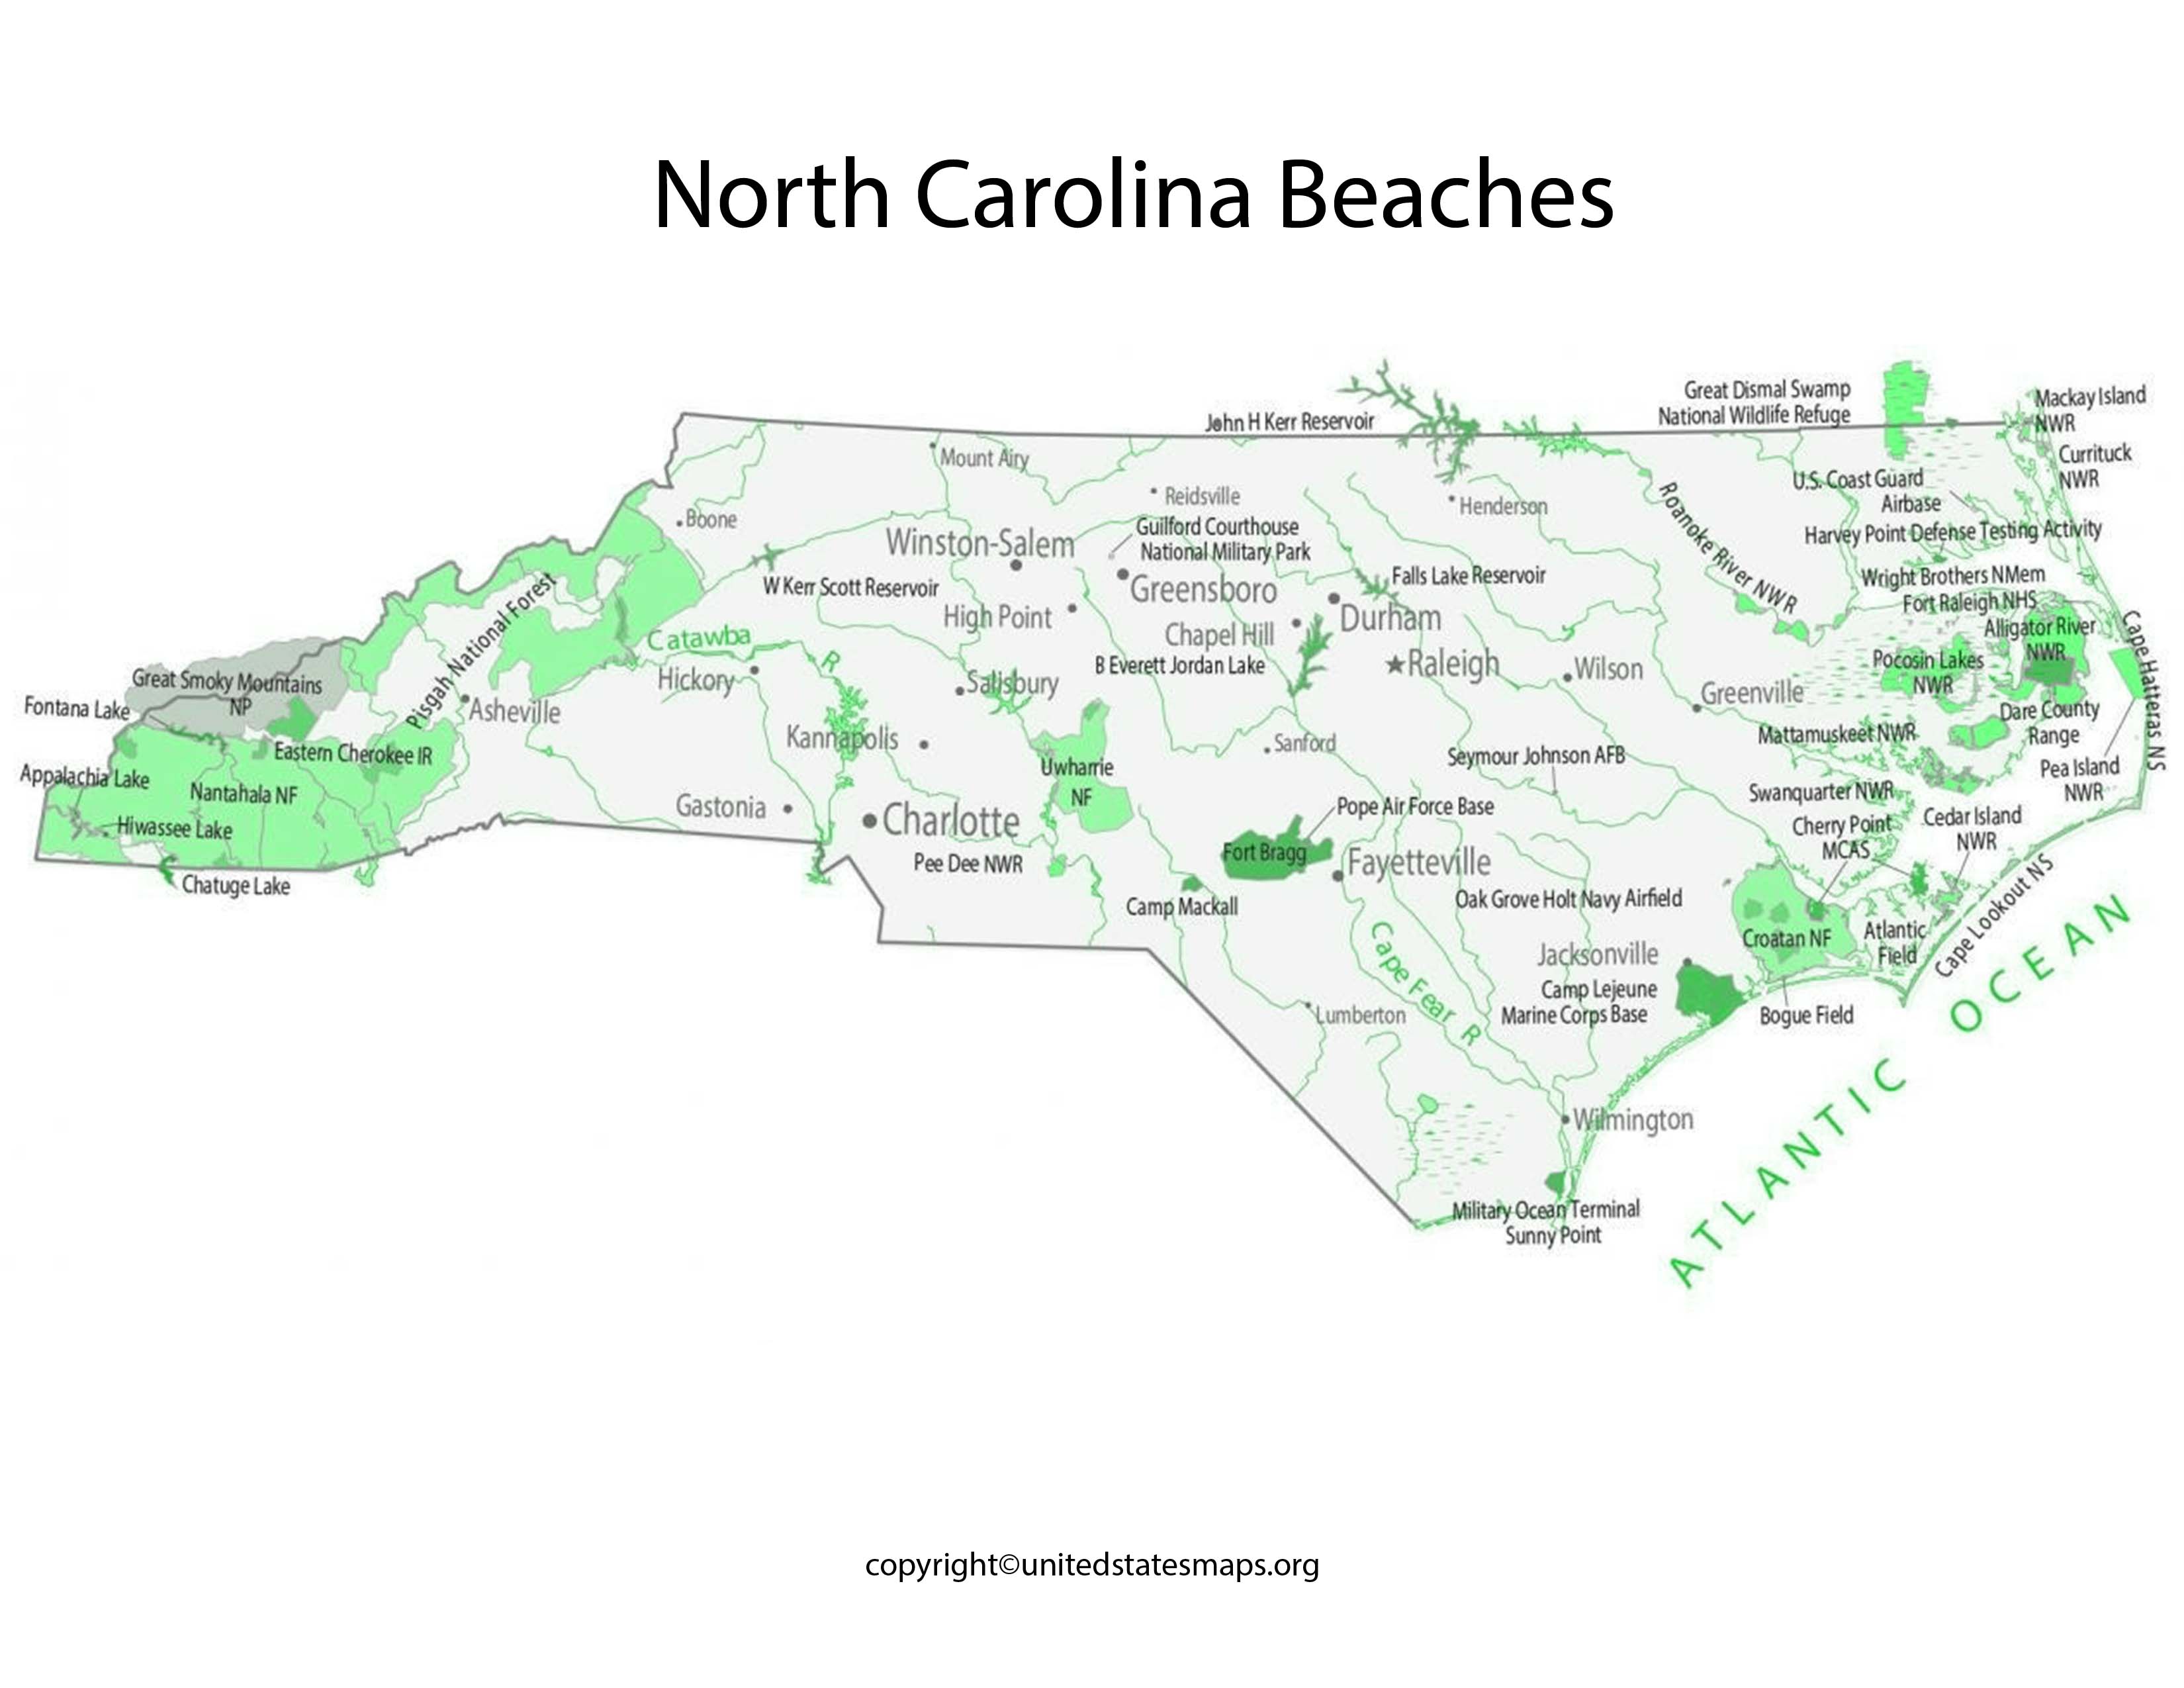 Beaches of North Carolina Map